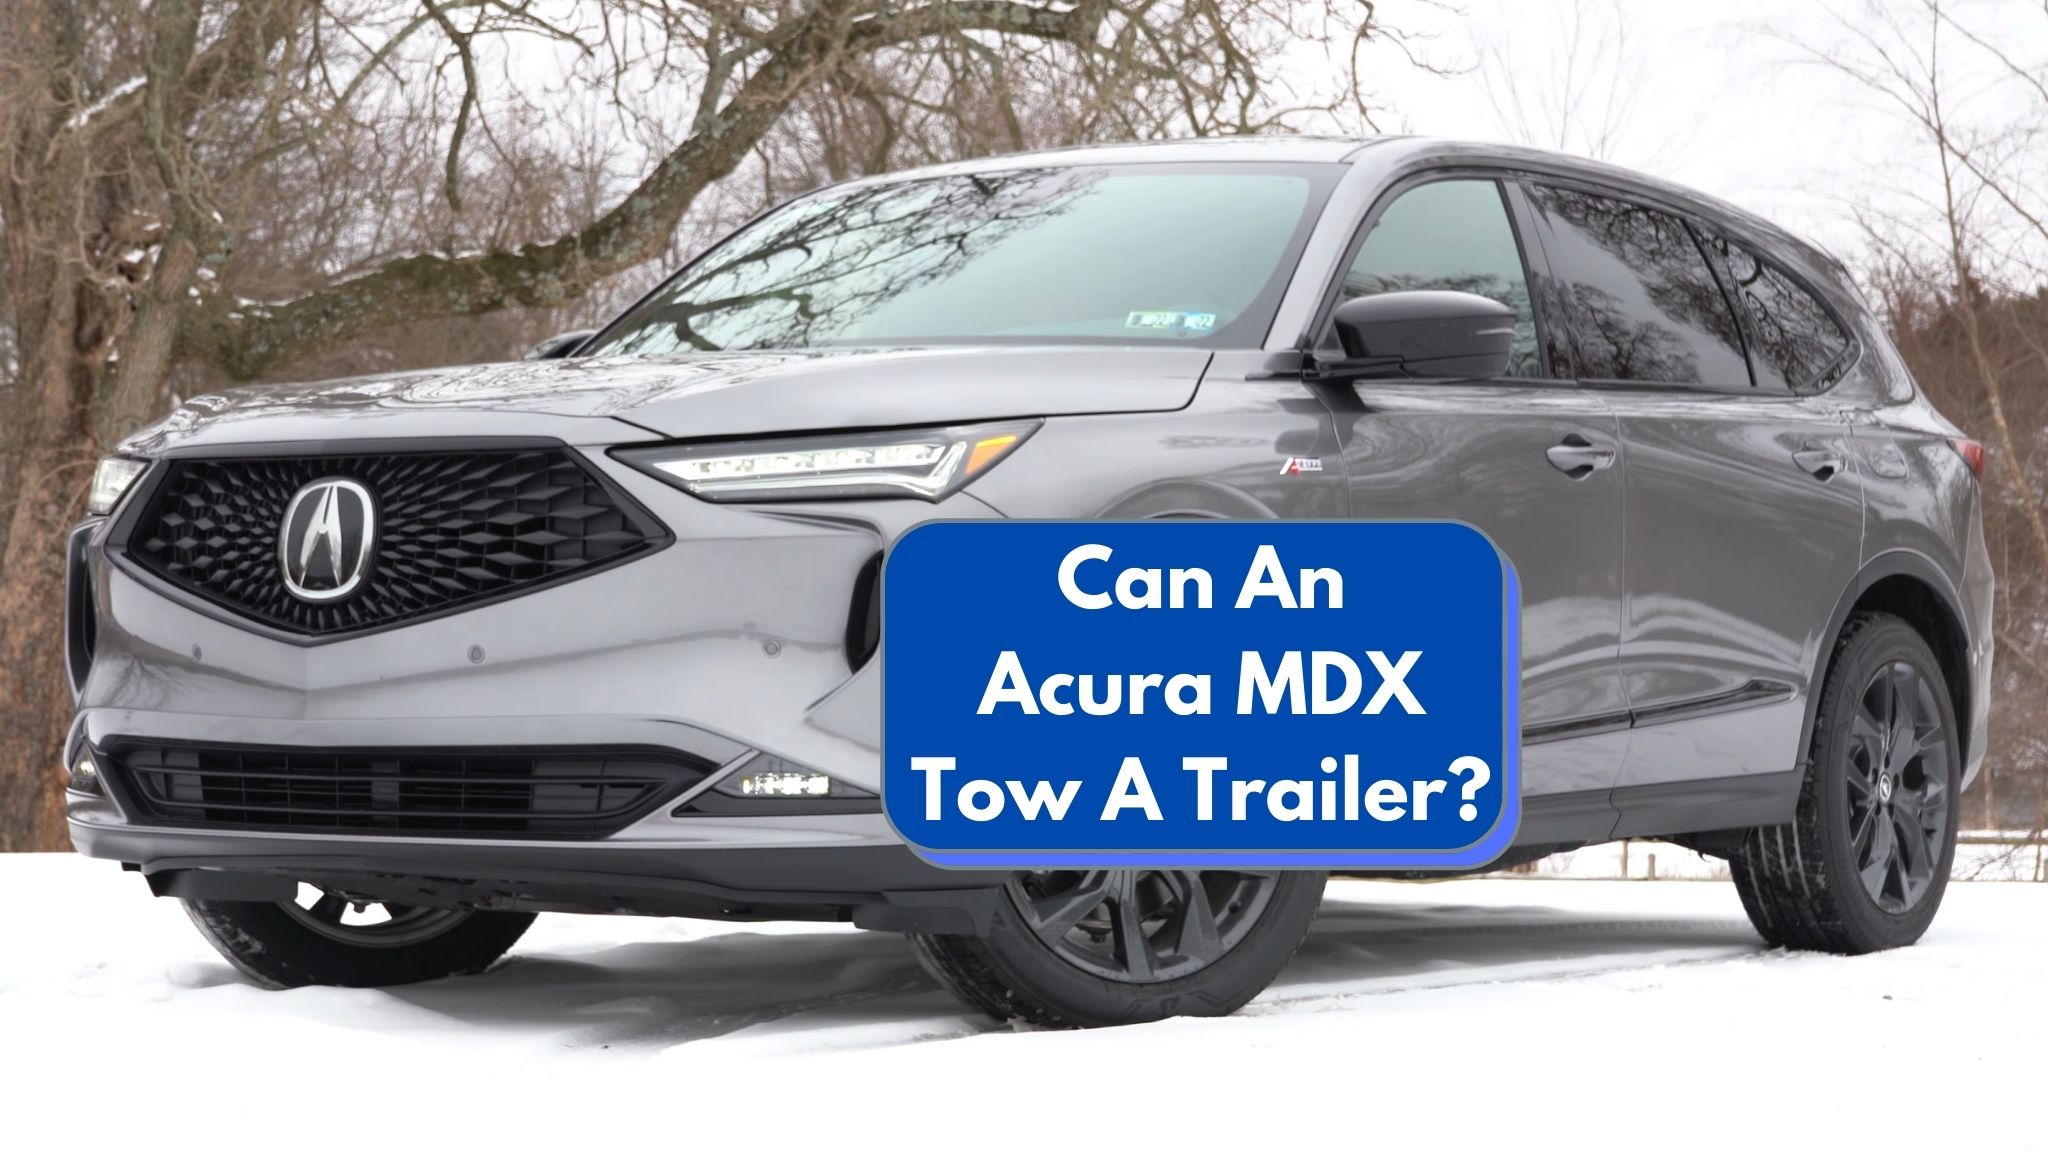 Can An Acura MDX Tow A Trailer